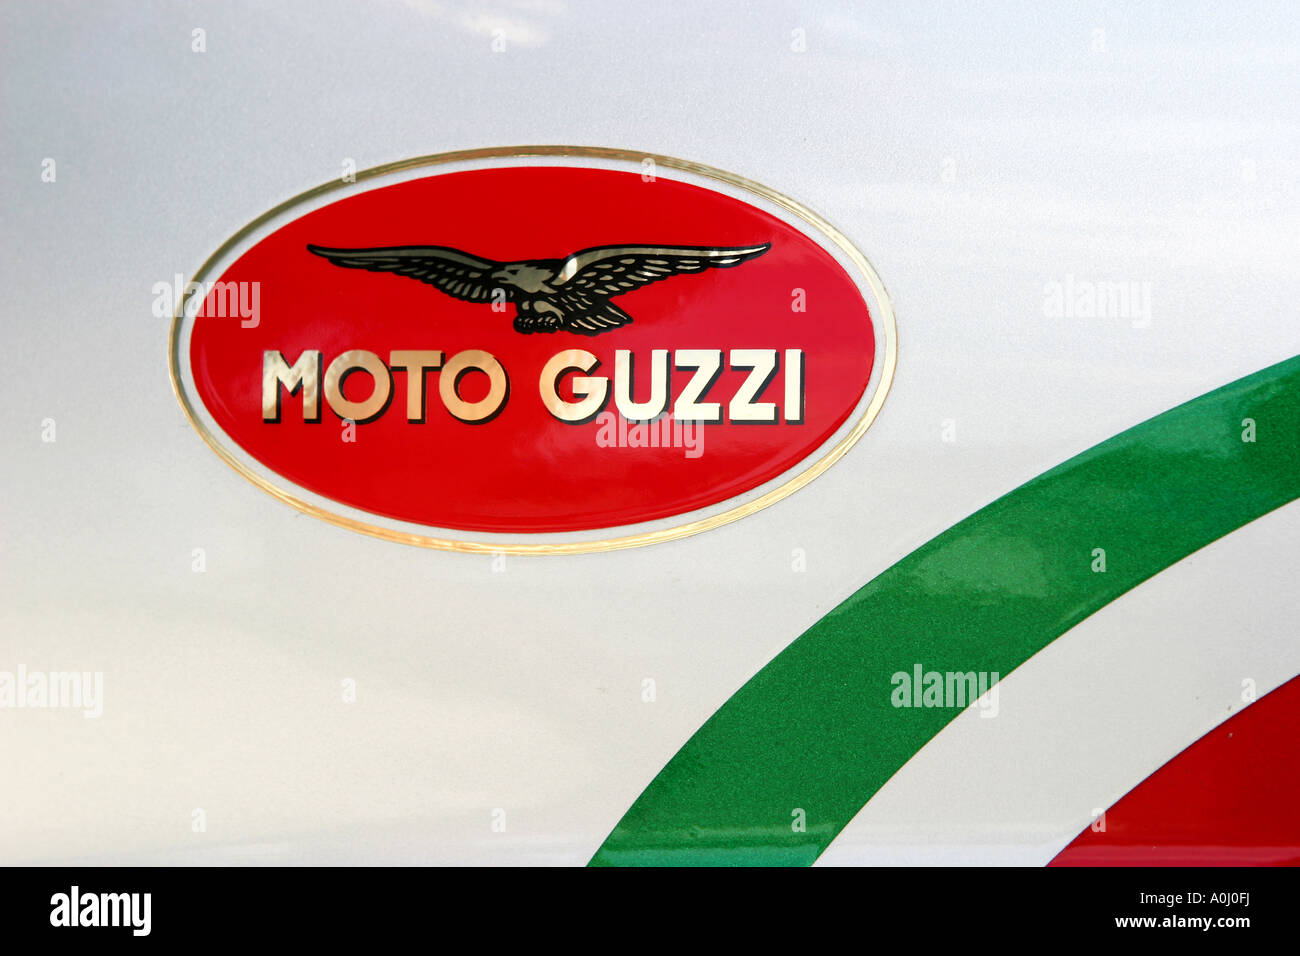 Moto Guzzi, motorcycle emblem Stock Photo